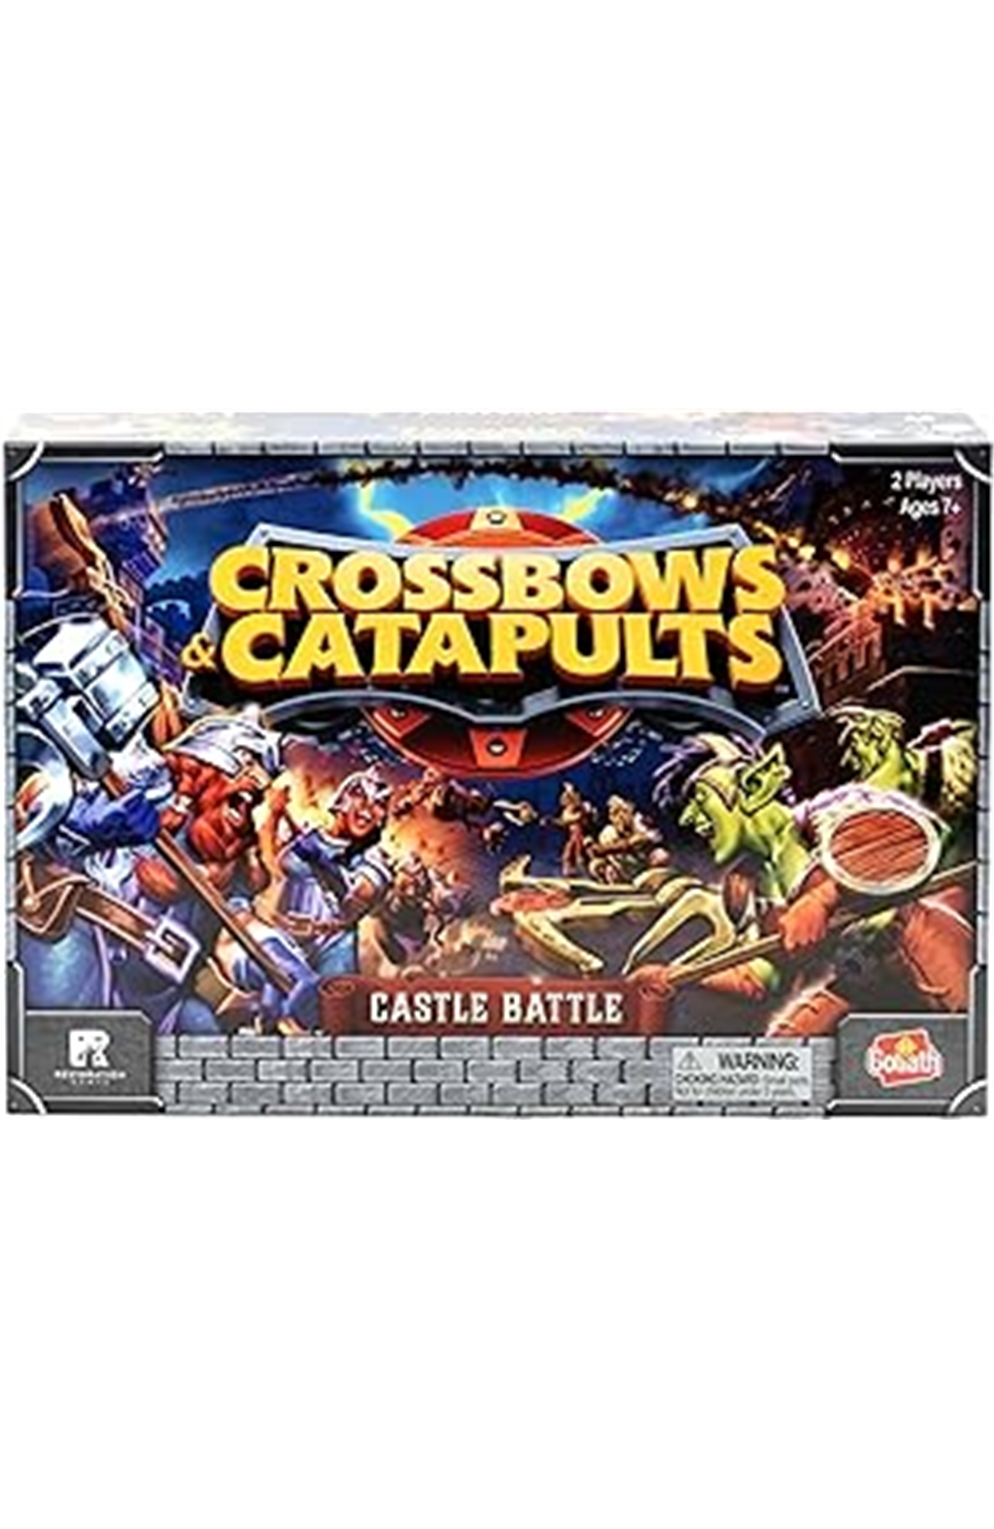 Crossbows & Catapults: Castle Battle Kickstarter